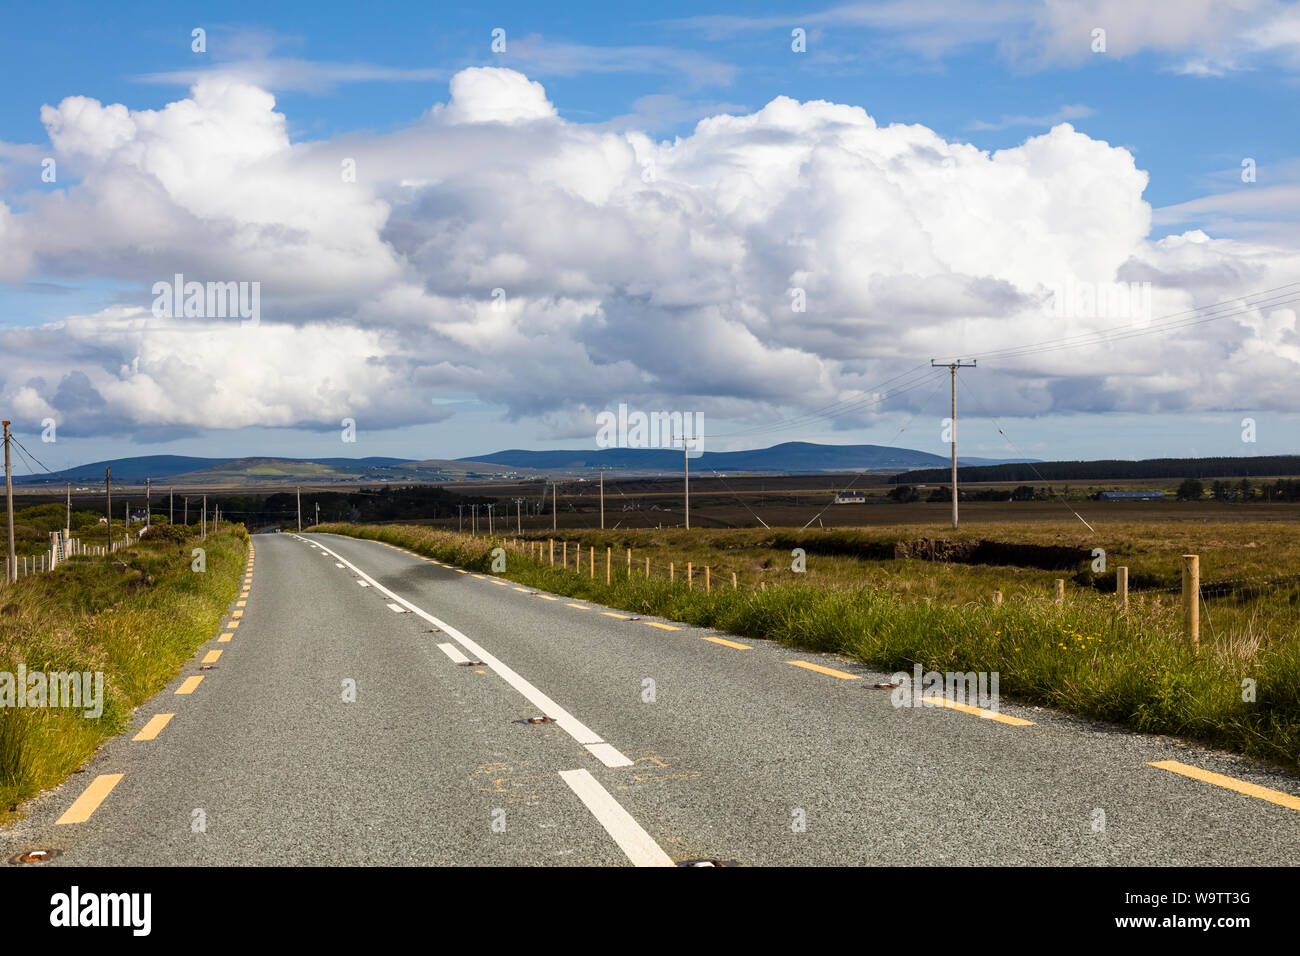 Looking down long paved road in rural northwestern Ireland Stock Photo